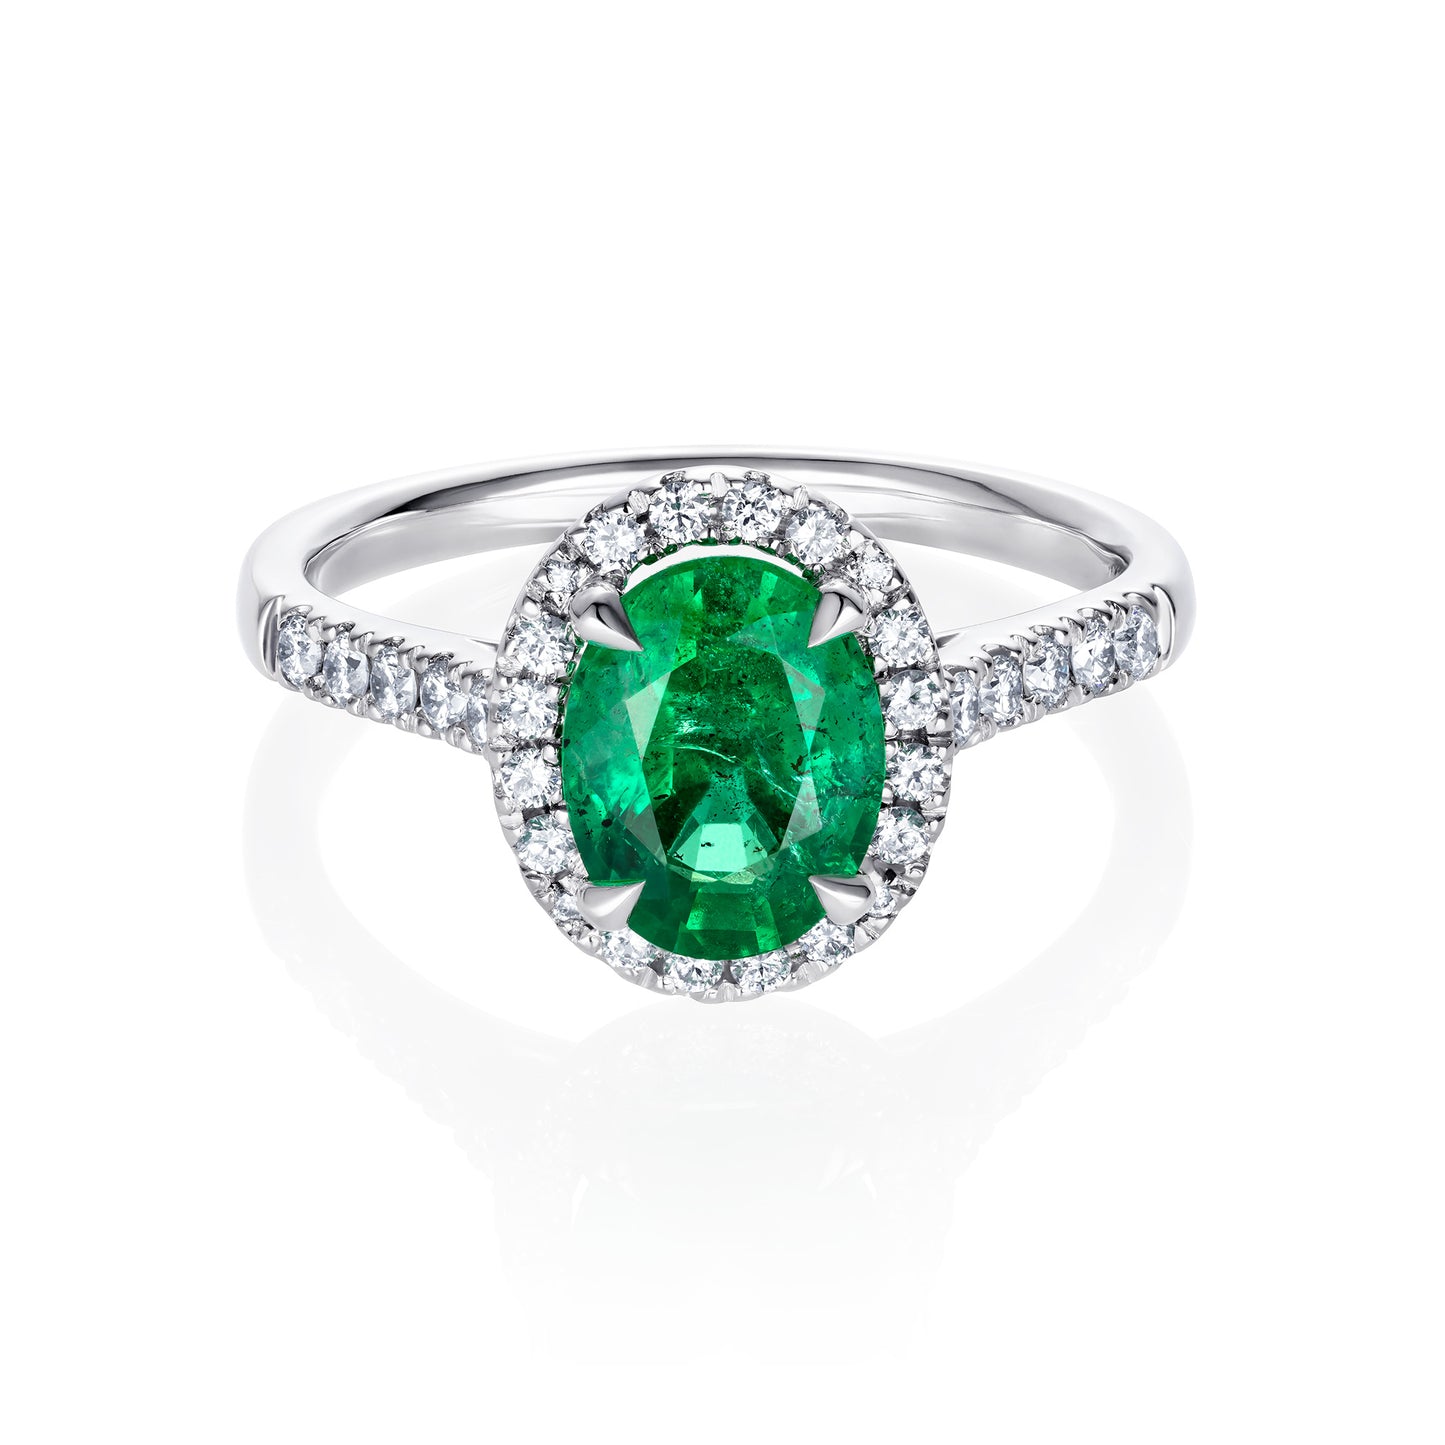 Oval emerald & diamond set halo engagement ring in platinum